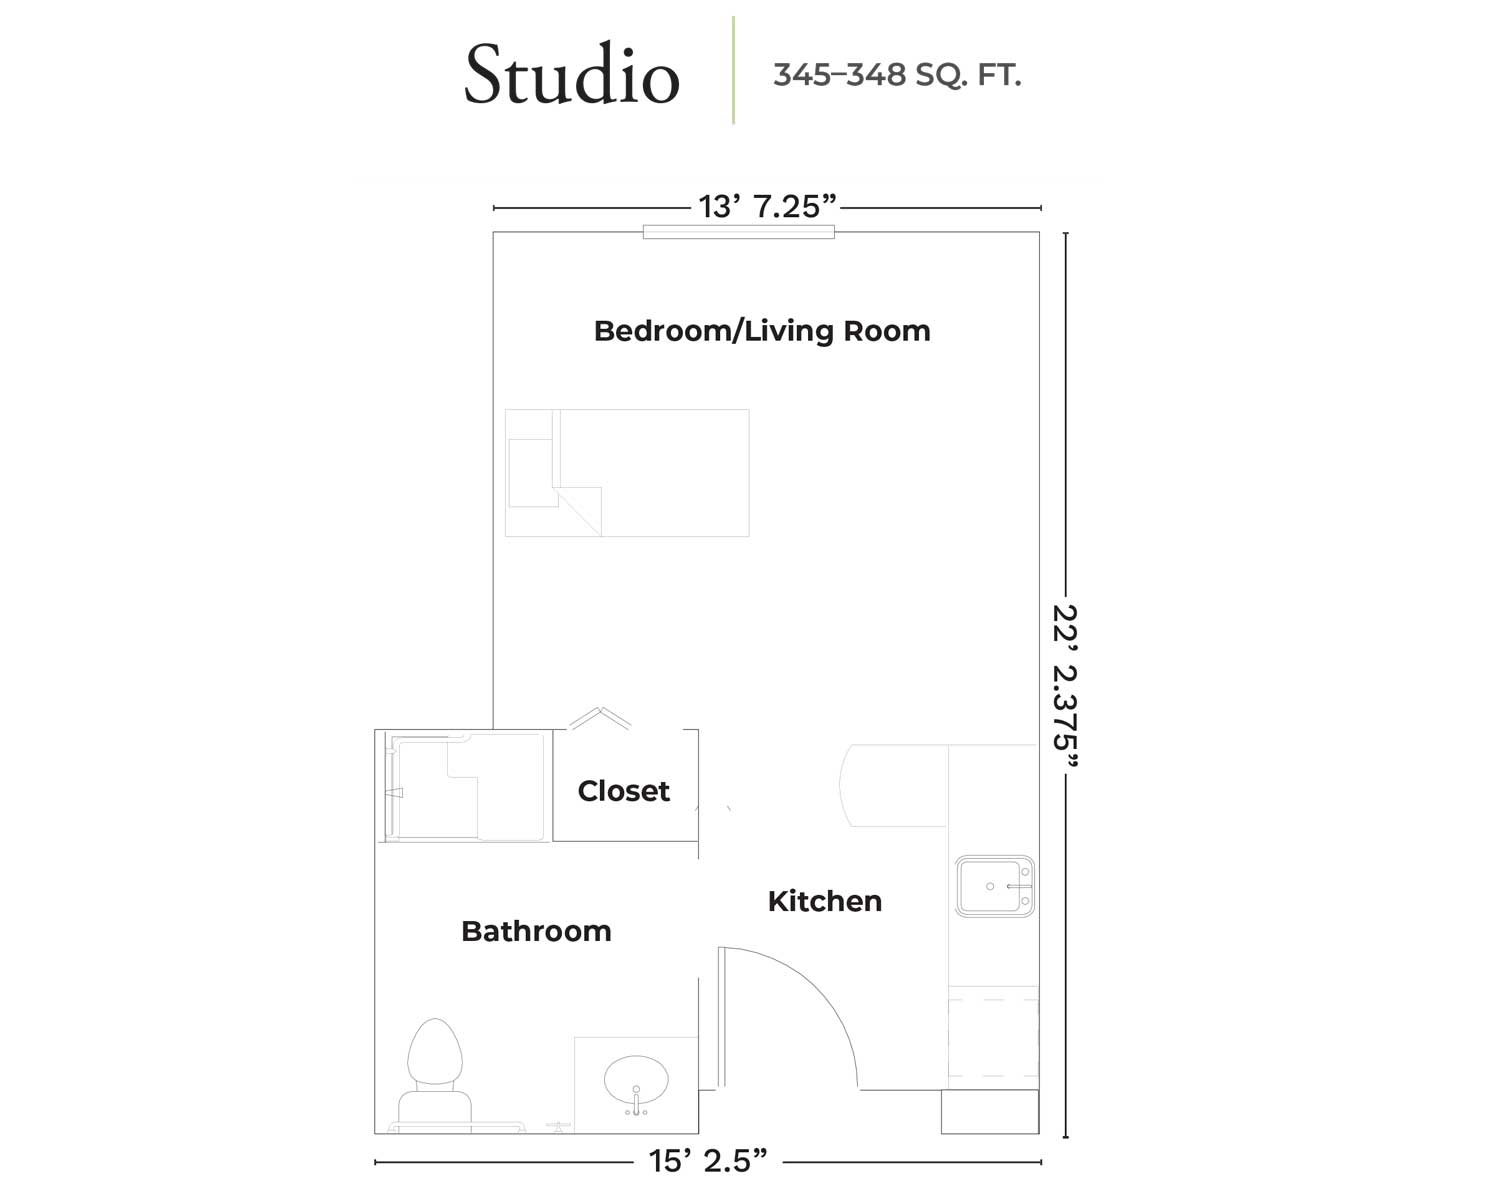 Floor plan of a studio apartment, showing bedroom/living room, kitchen, closet, and bathroom.